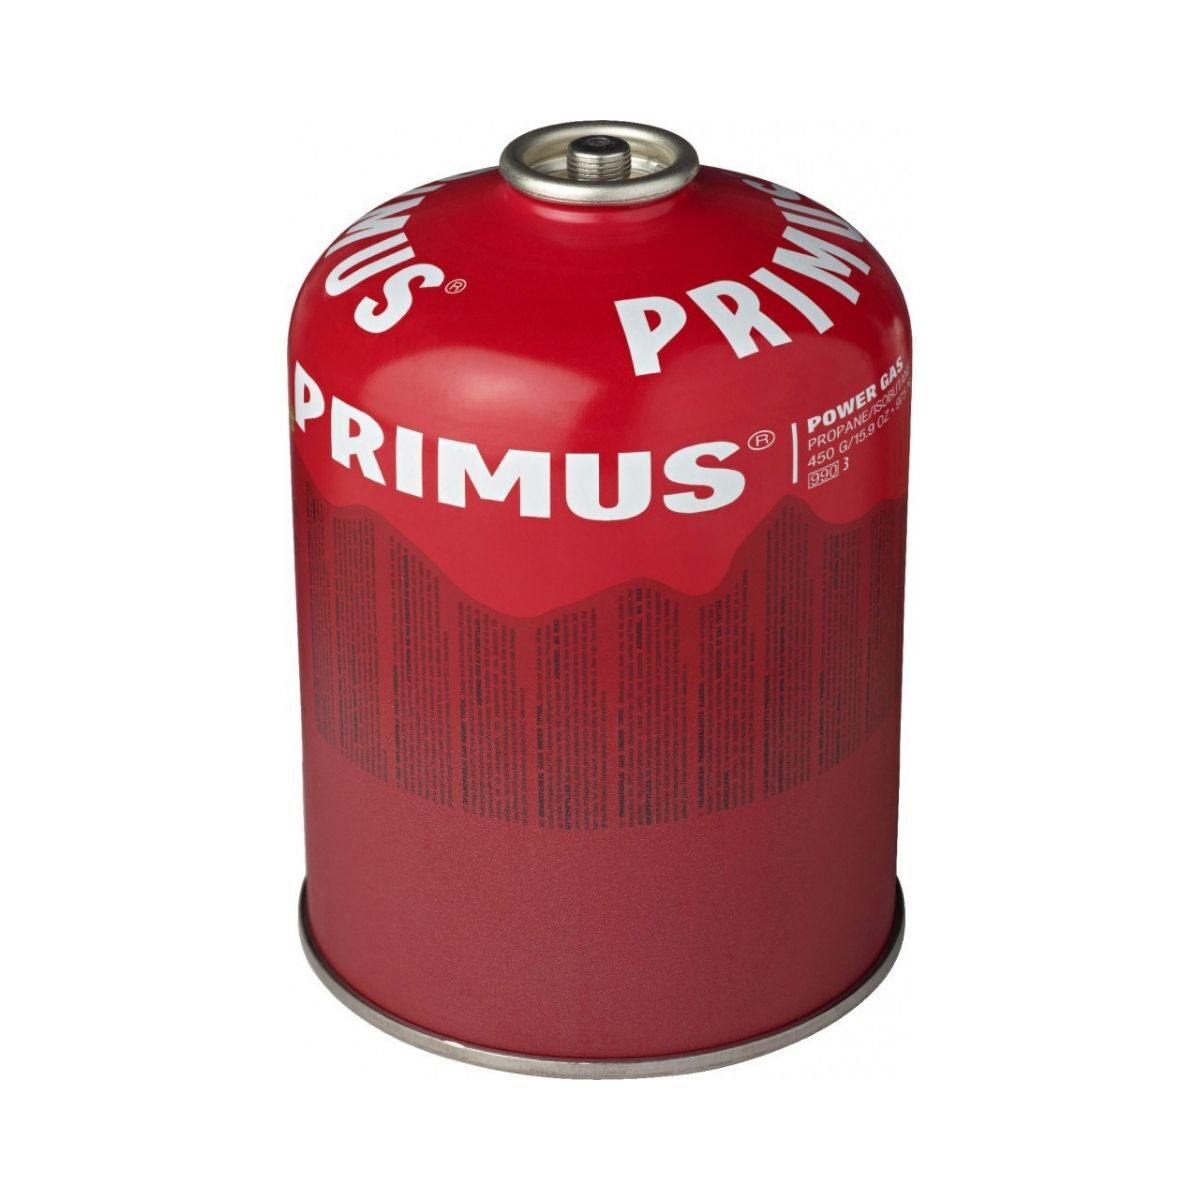 Primus Power Gas 450 g L2 - Gaspatron